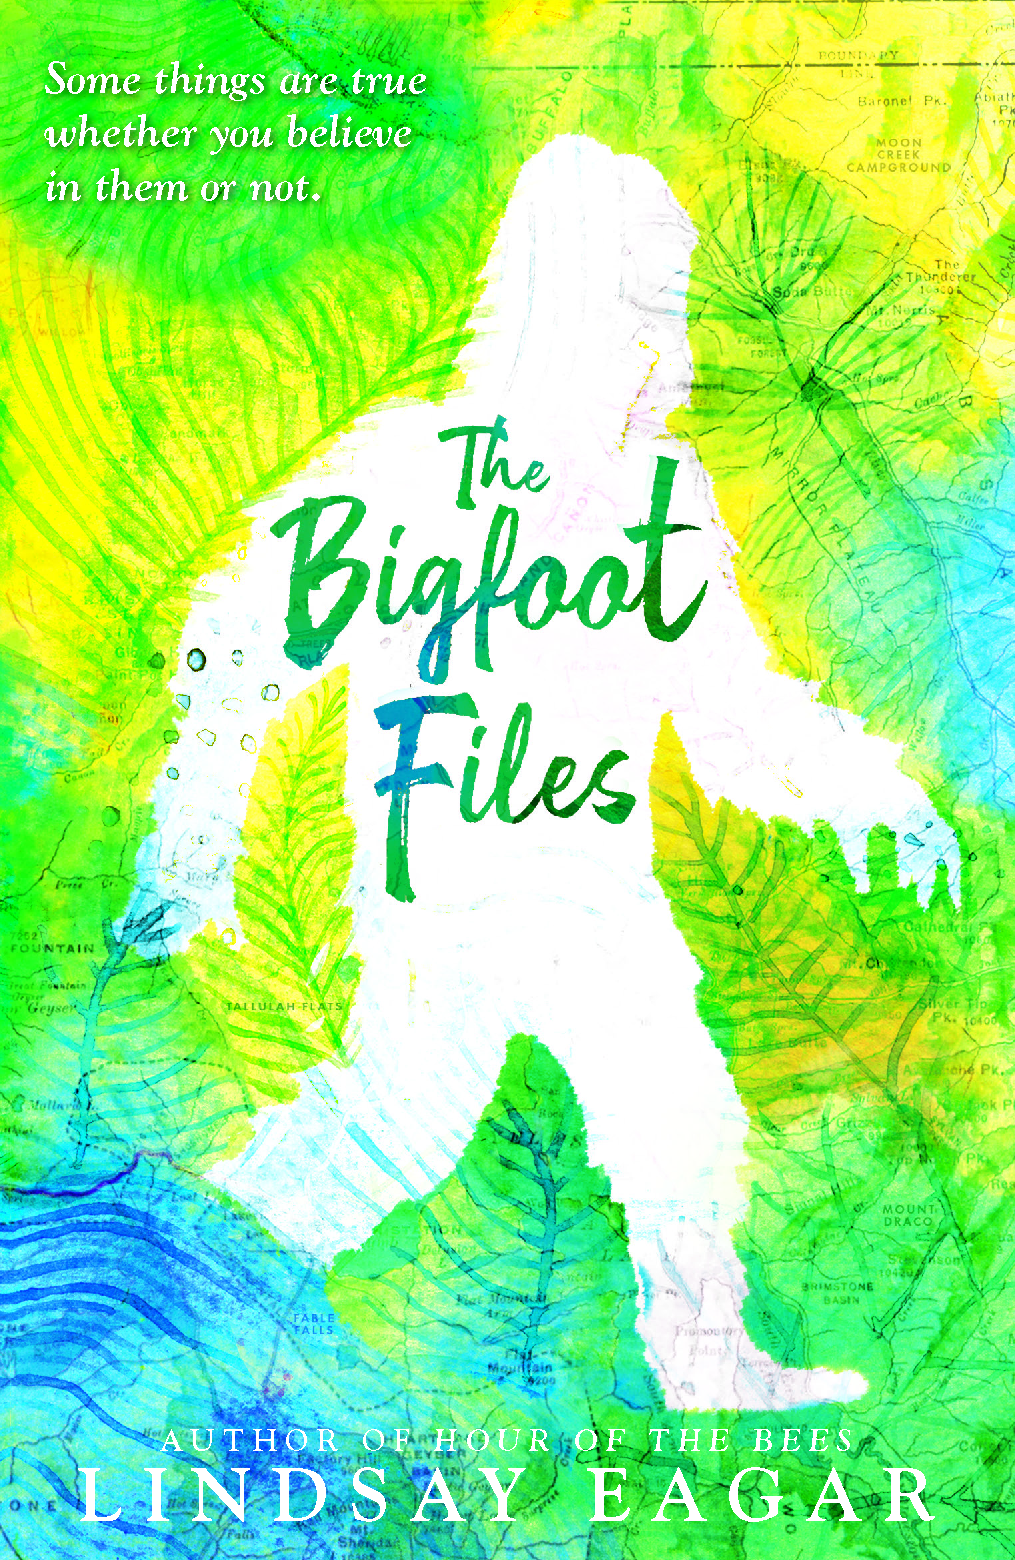 The-Bigfoot-Files